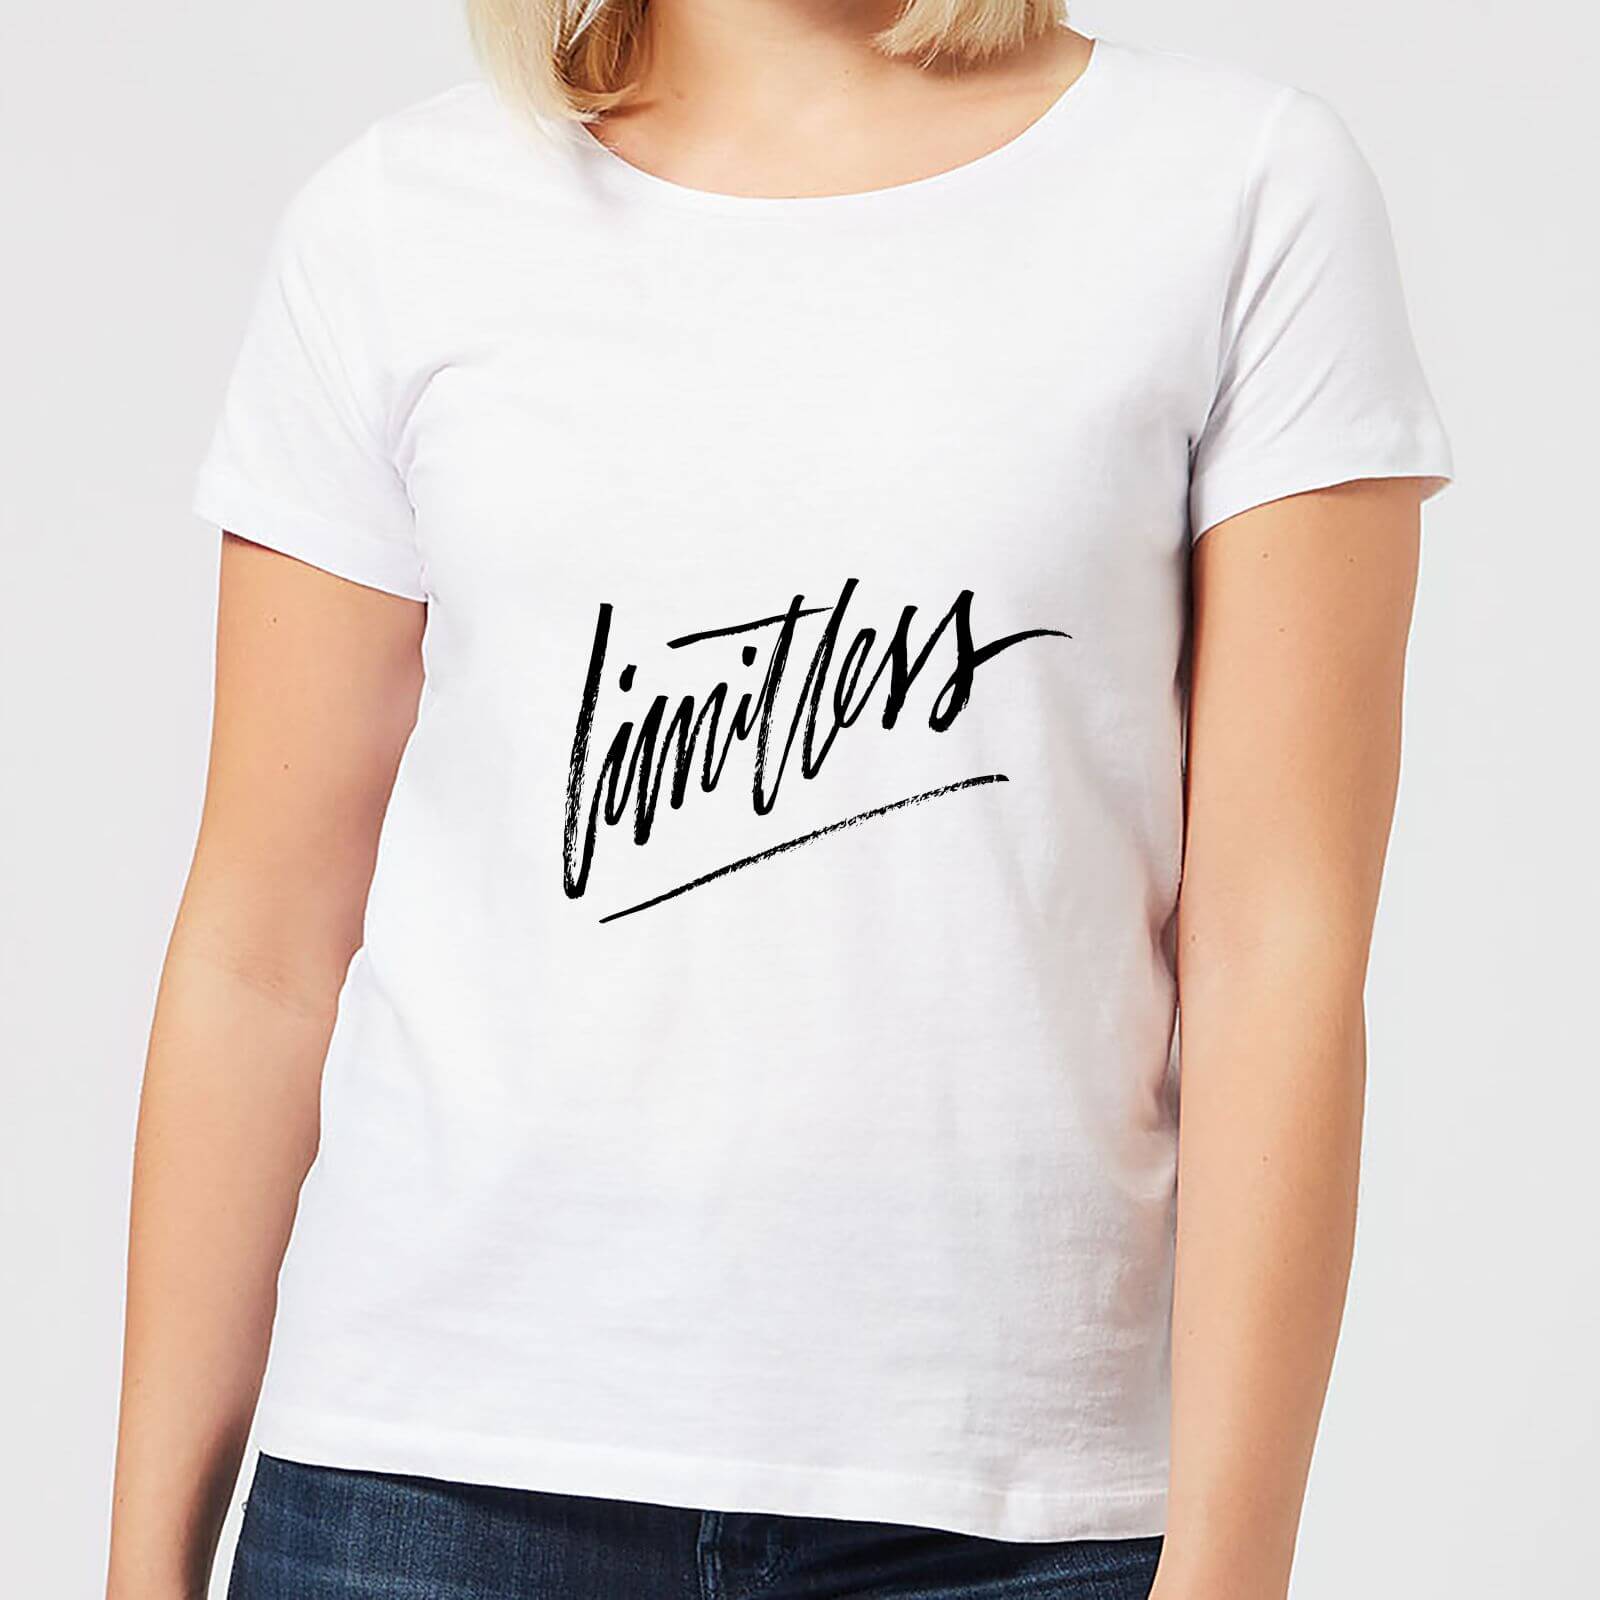 Limitless Women's T-Shirt - White - L - White